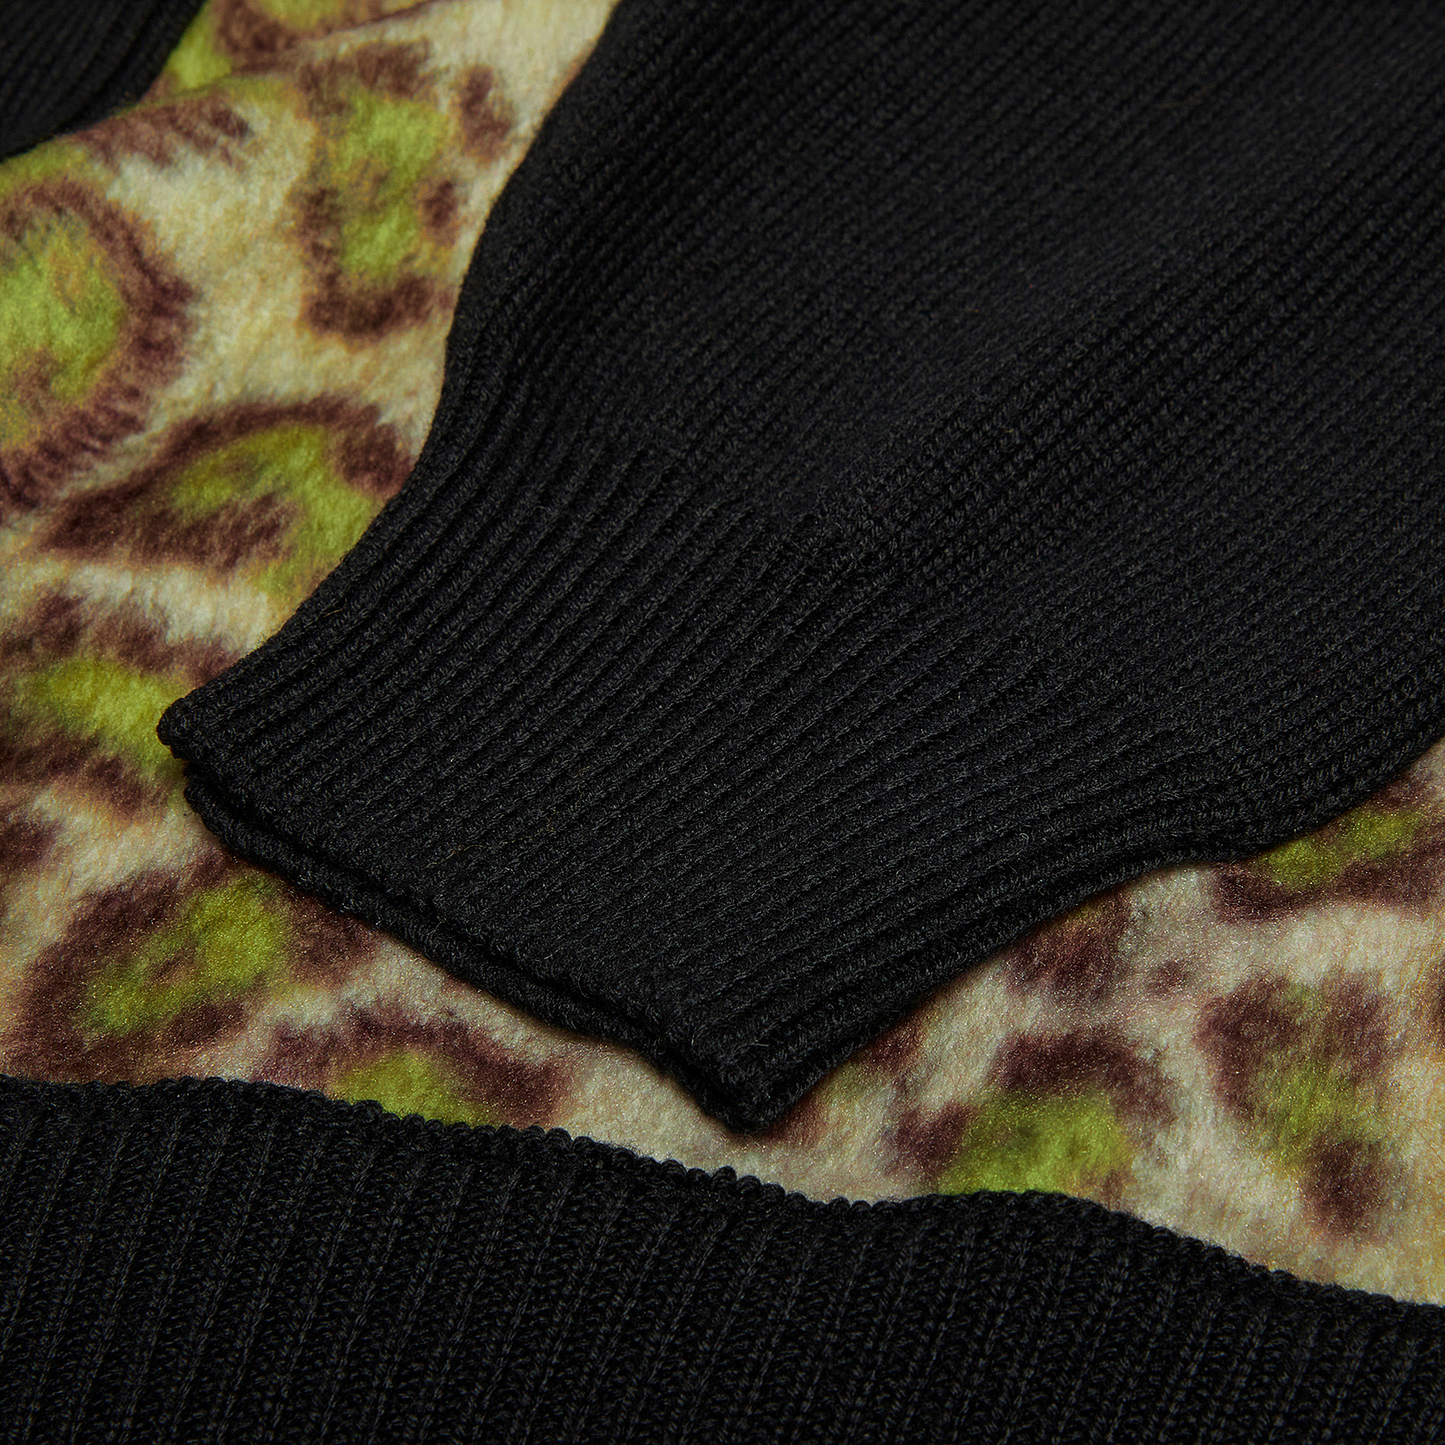 Moschino Merino Wool Knitted Cardigan (Leopard Print/Black)